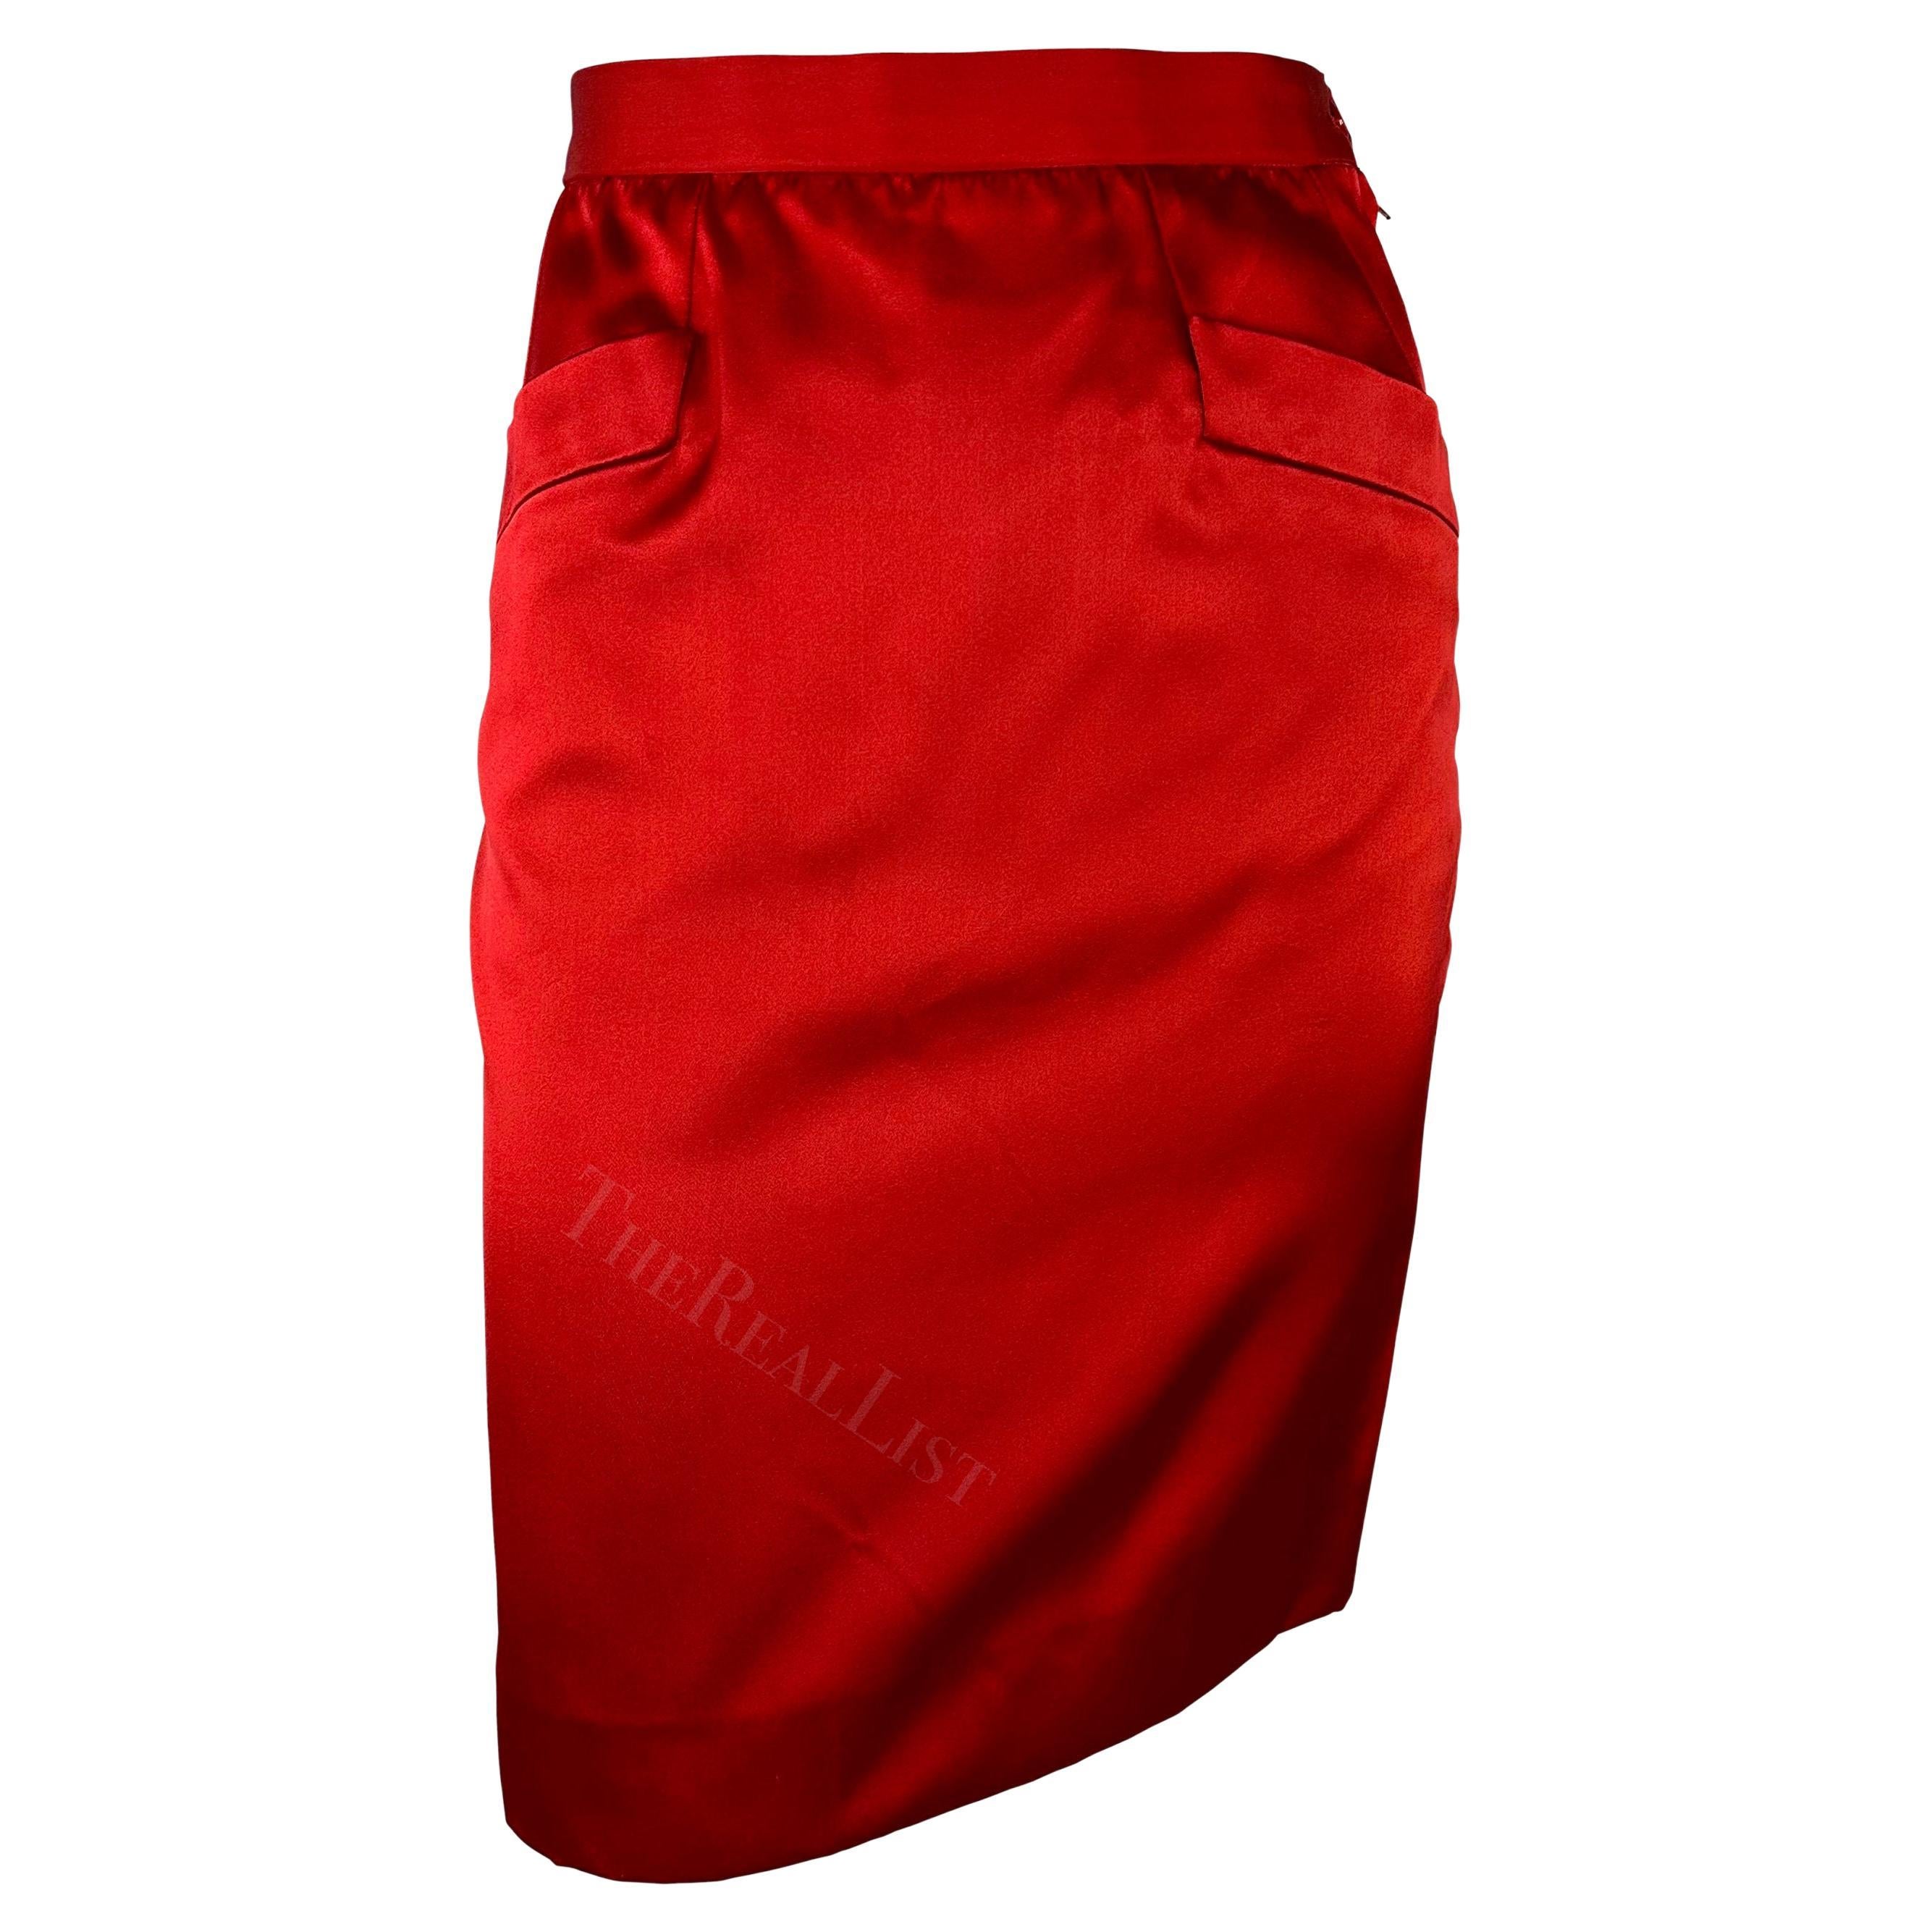 F/W 1988 Saint Laurent Rive Gauche Runway Red Satin Pocket Pencil Skirt For Sale